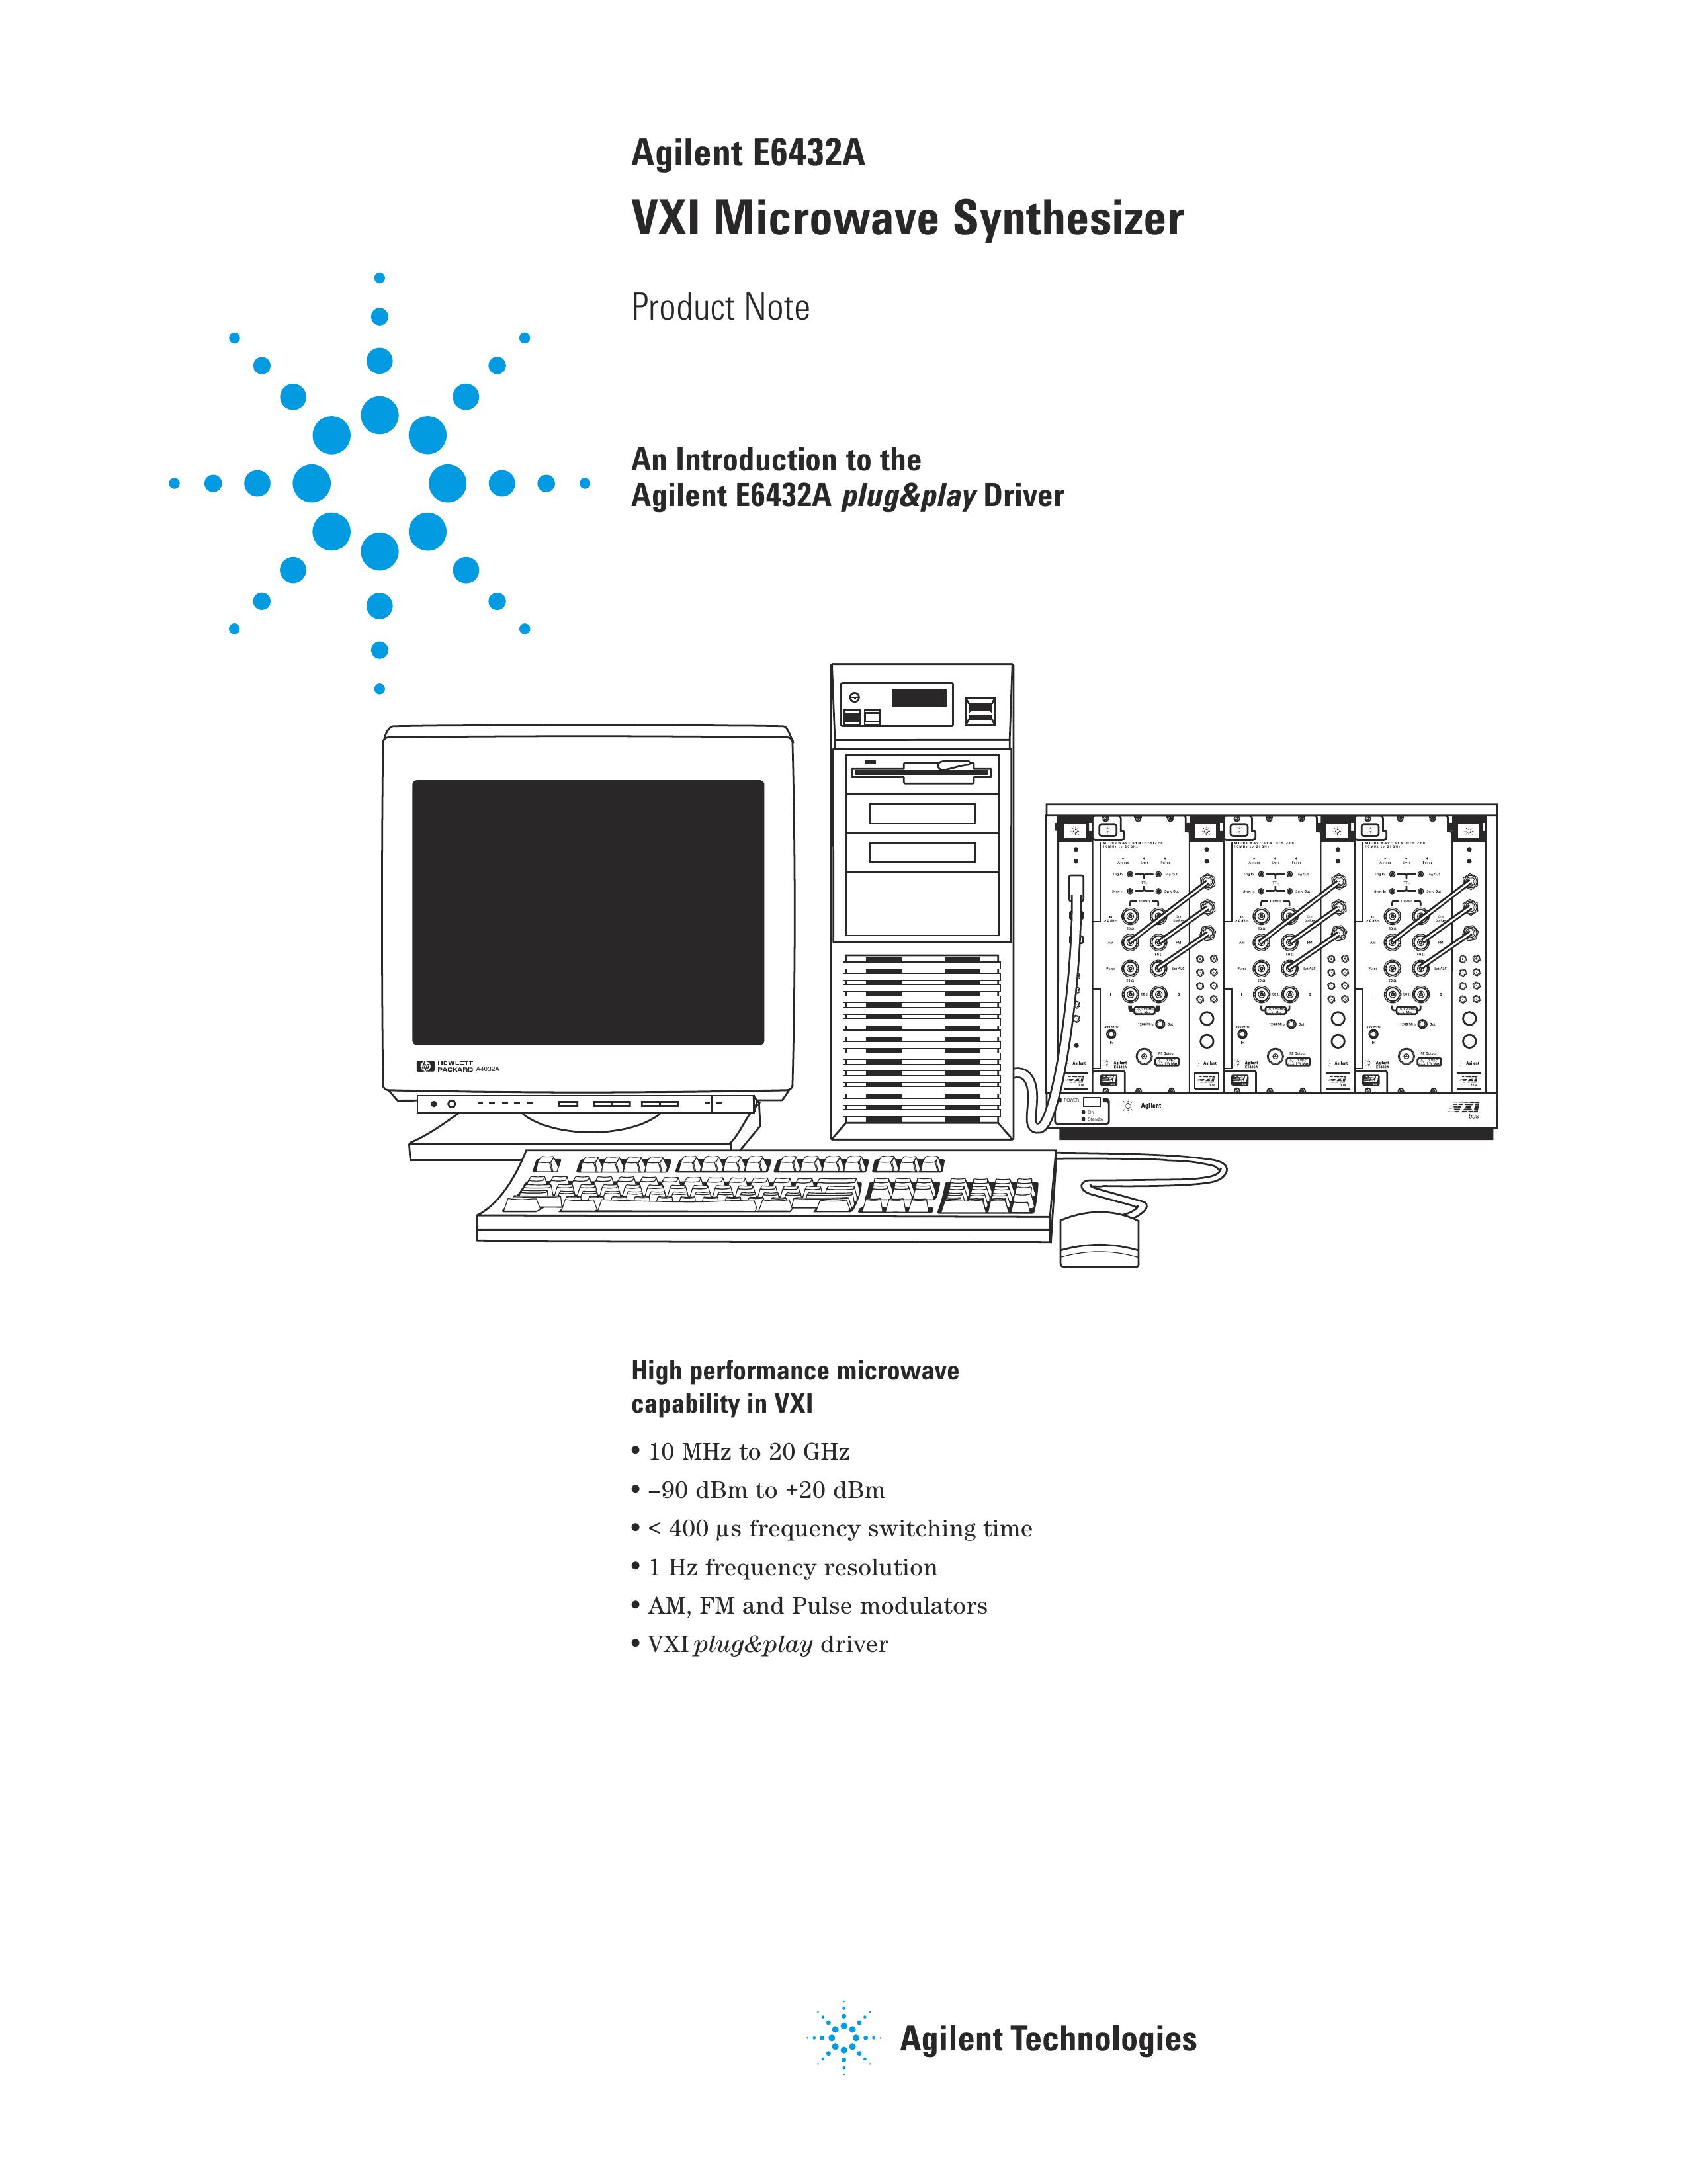 Agilent Technologies E6432A Recording Equipment User Manual (Page 1)